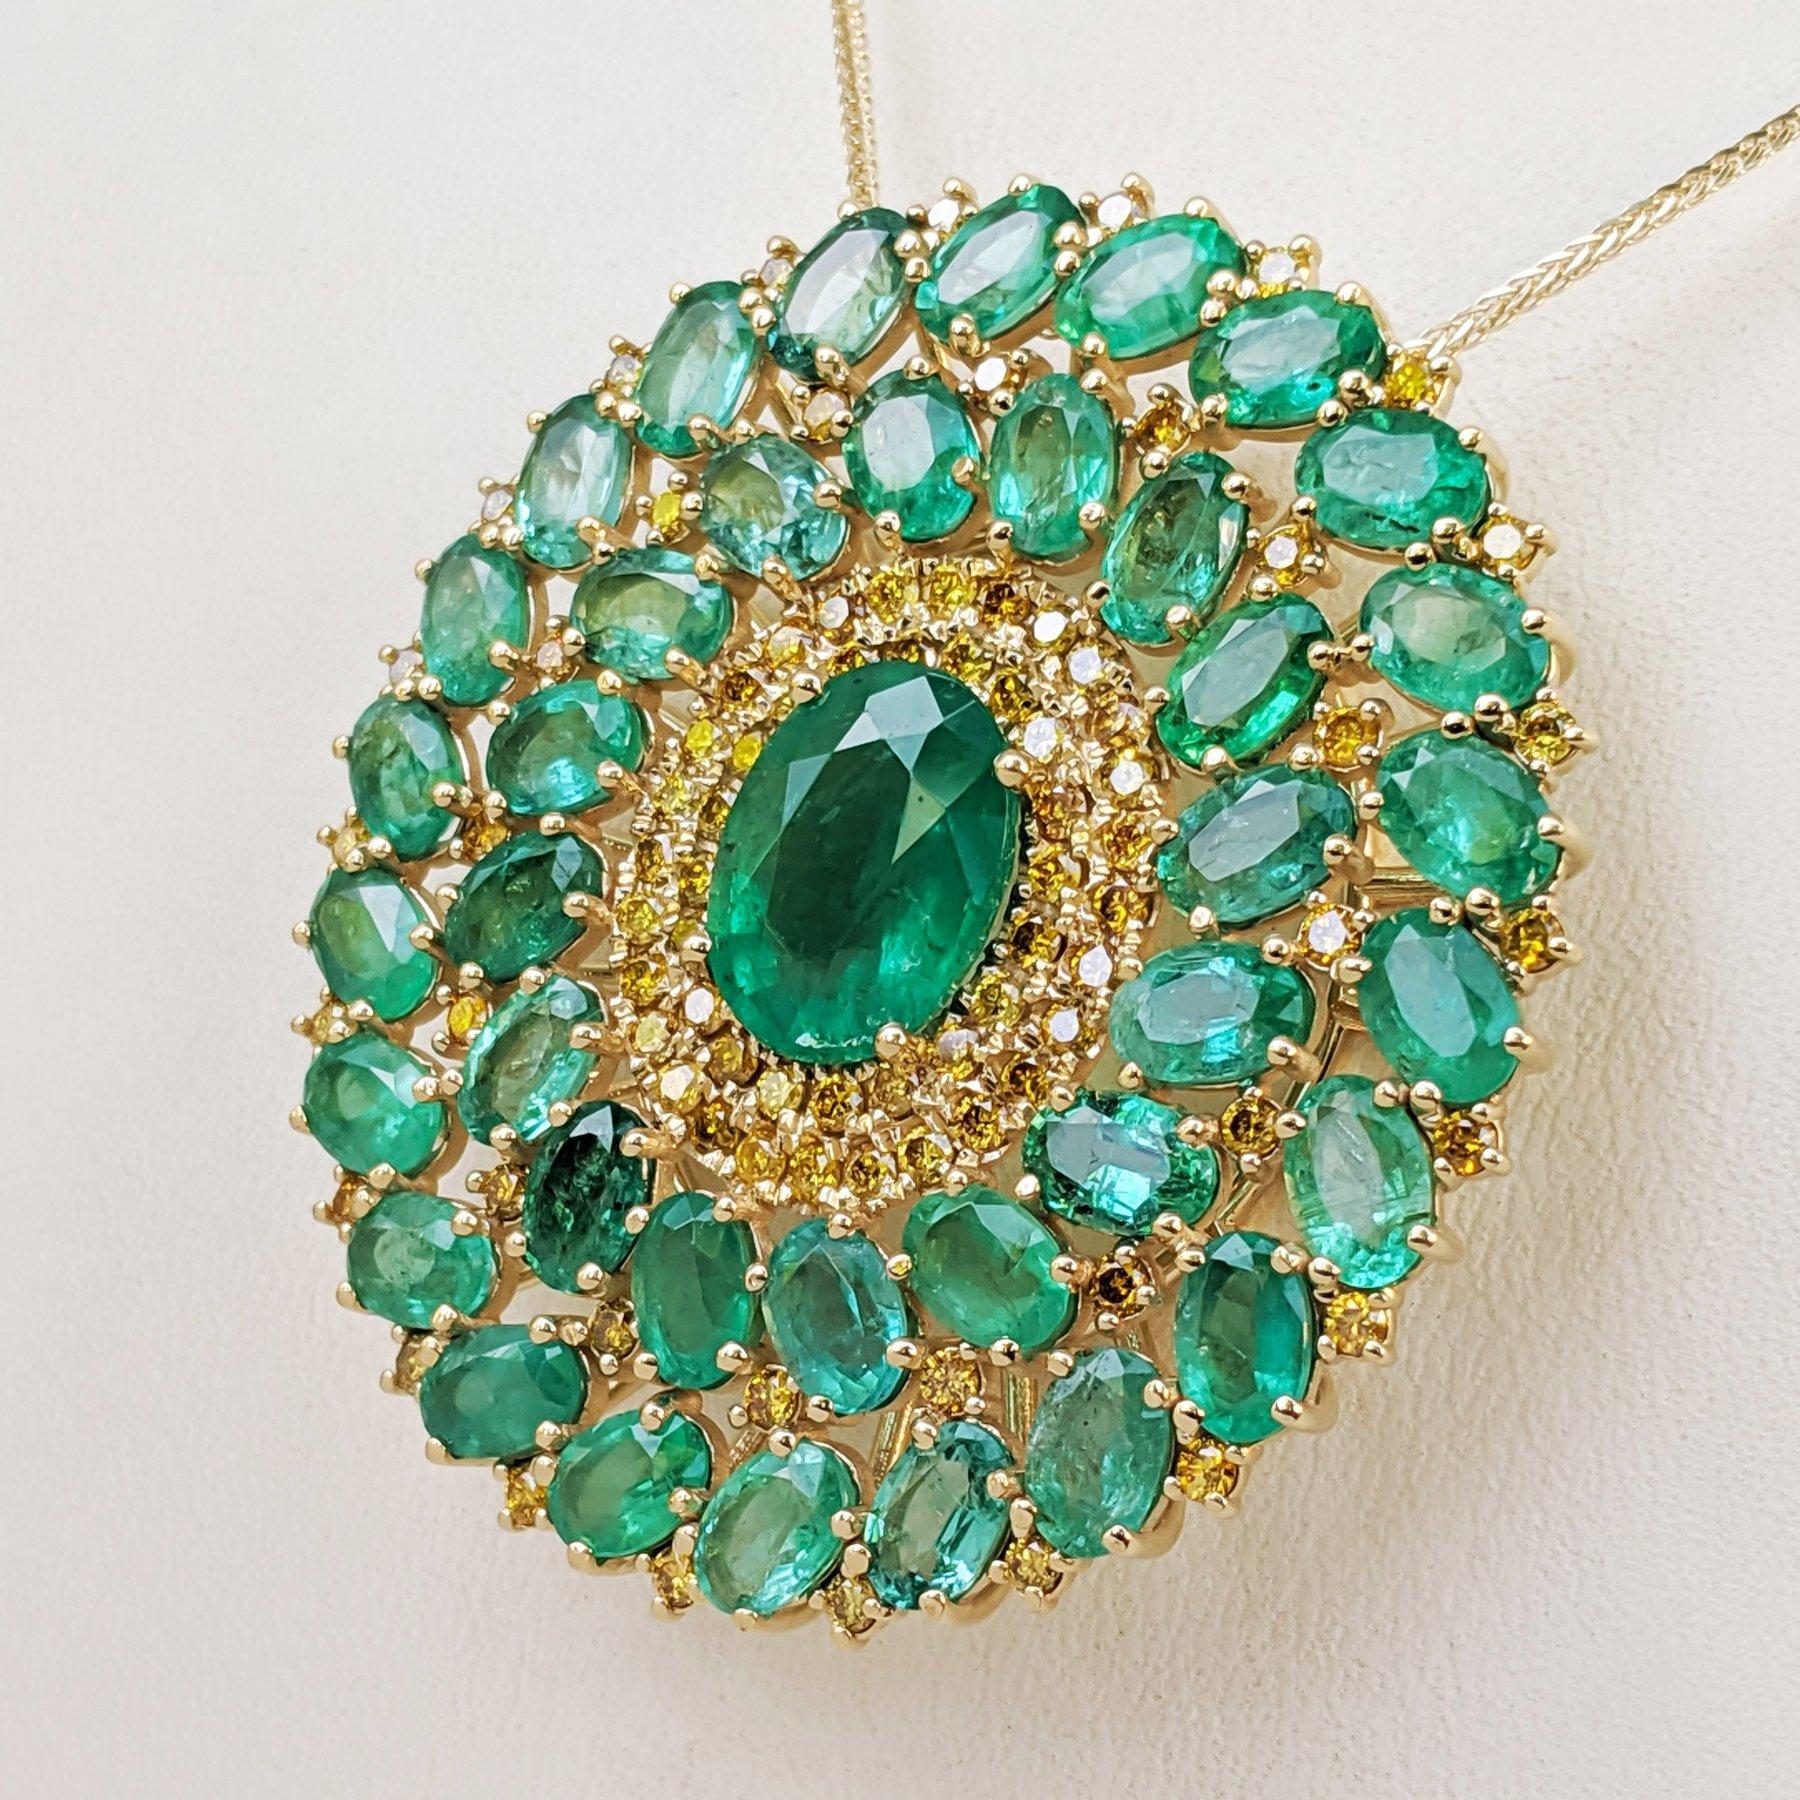 Oval Cut NO RESERVE 20.12Ct Emeralds & 2.05Ct Diamonds 14 kt. Gold Pendant Necklace For Sale